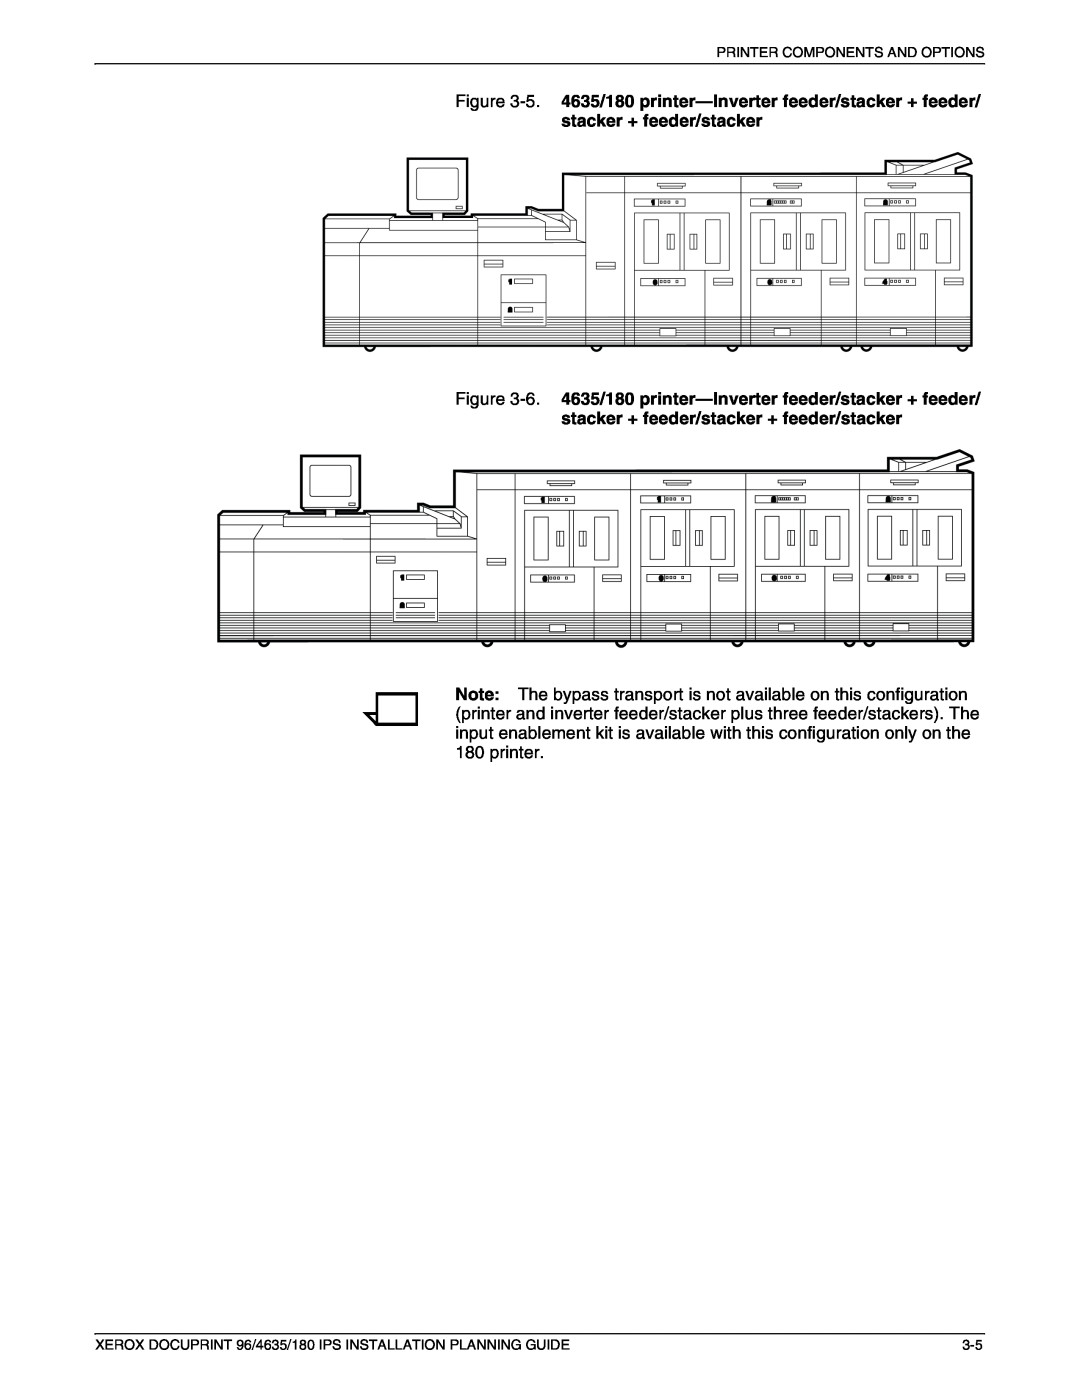 Xerox 180 IPS manual Figure, 4635/180 printer—Inverterfeeder/stacker + feeder, stacker + feeder/stacker 